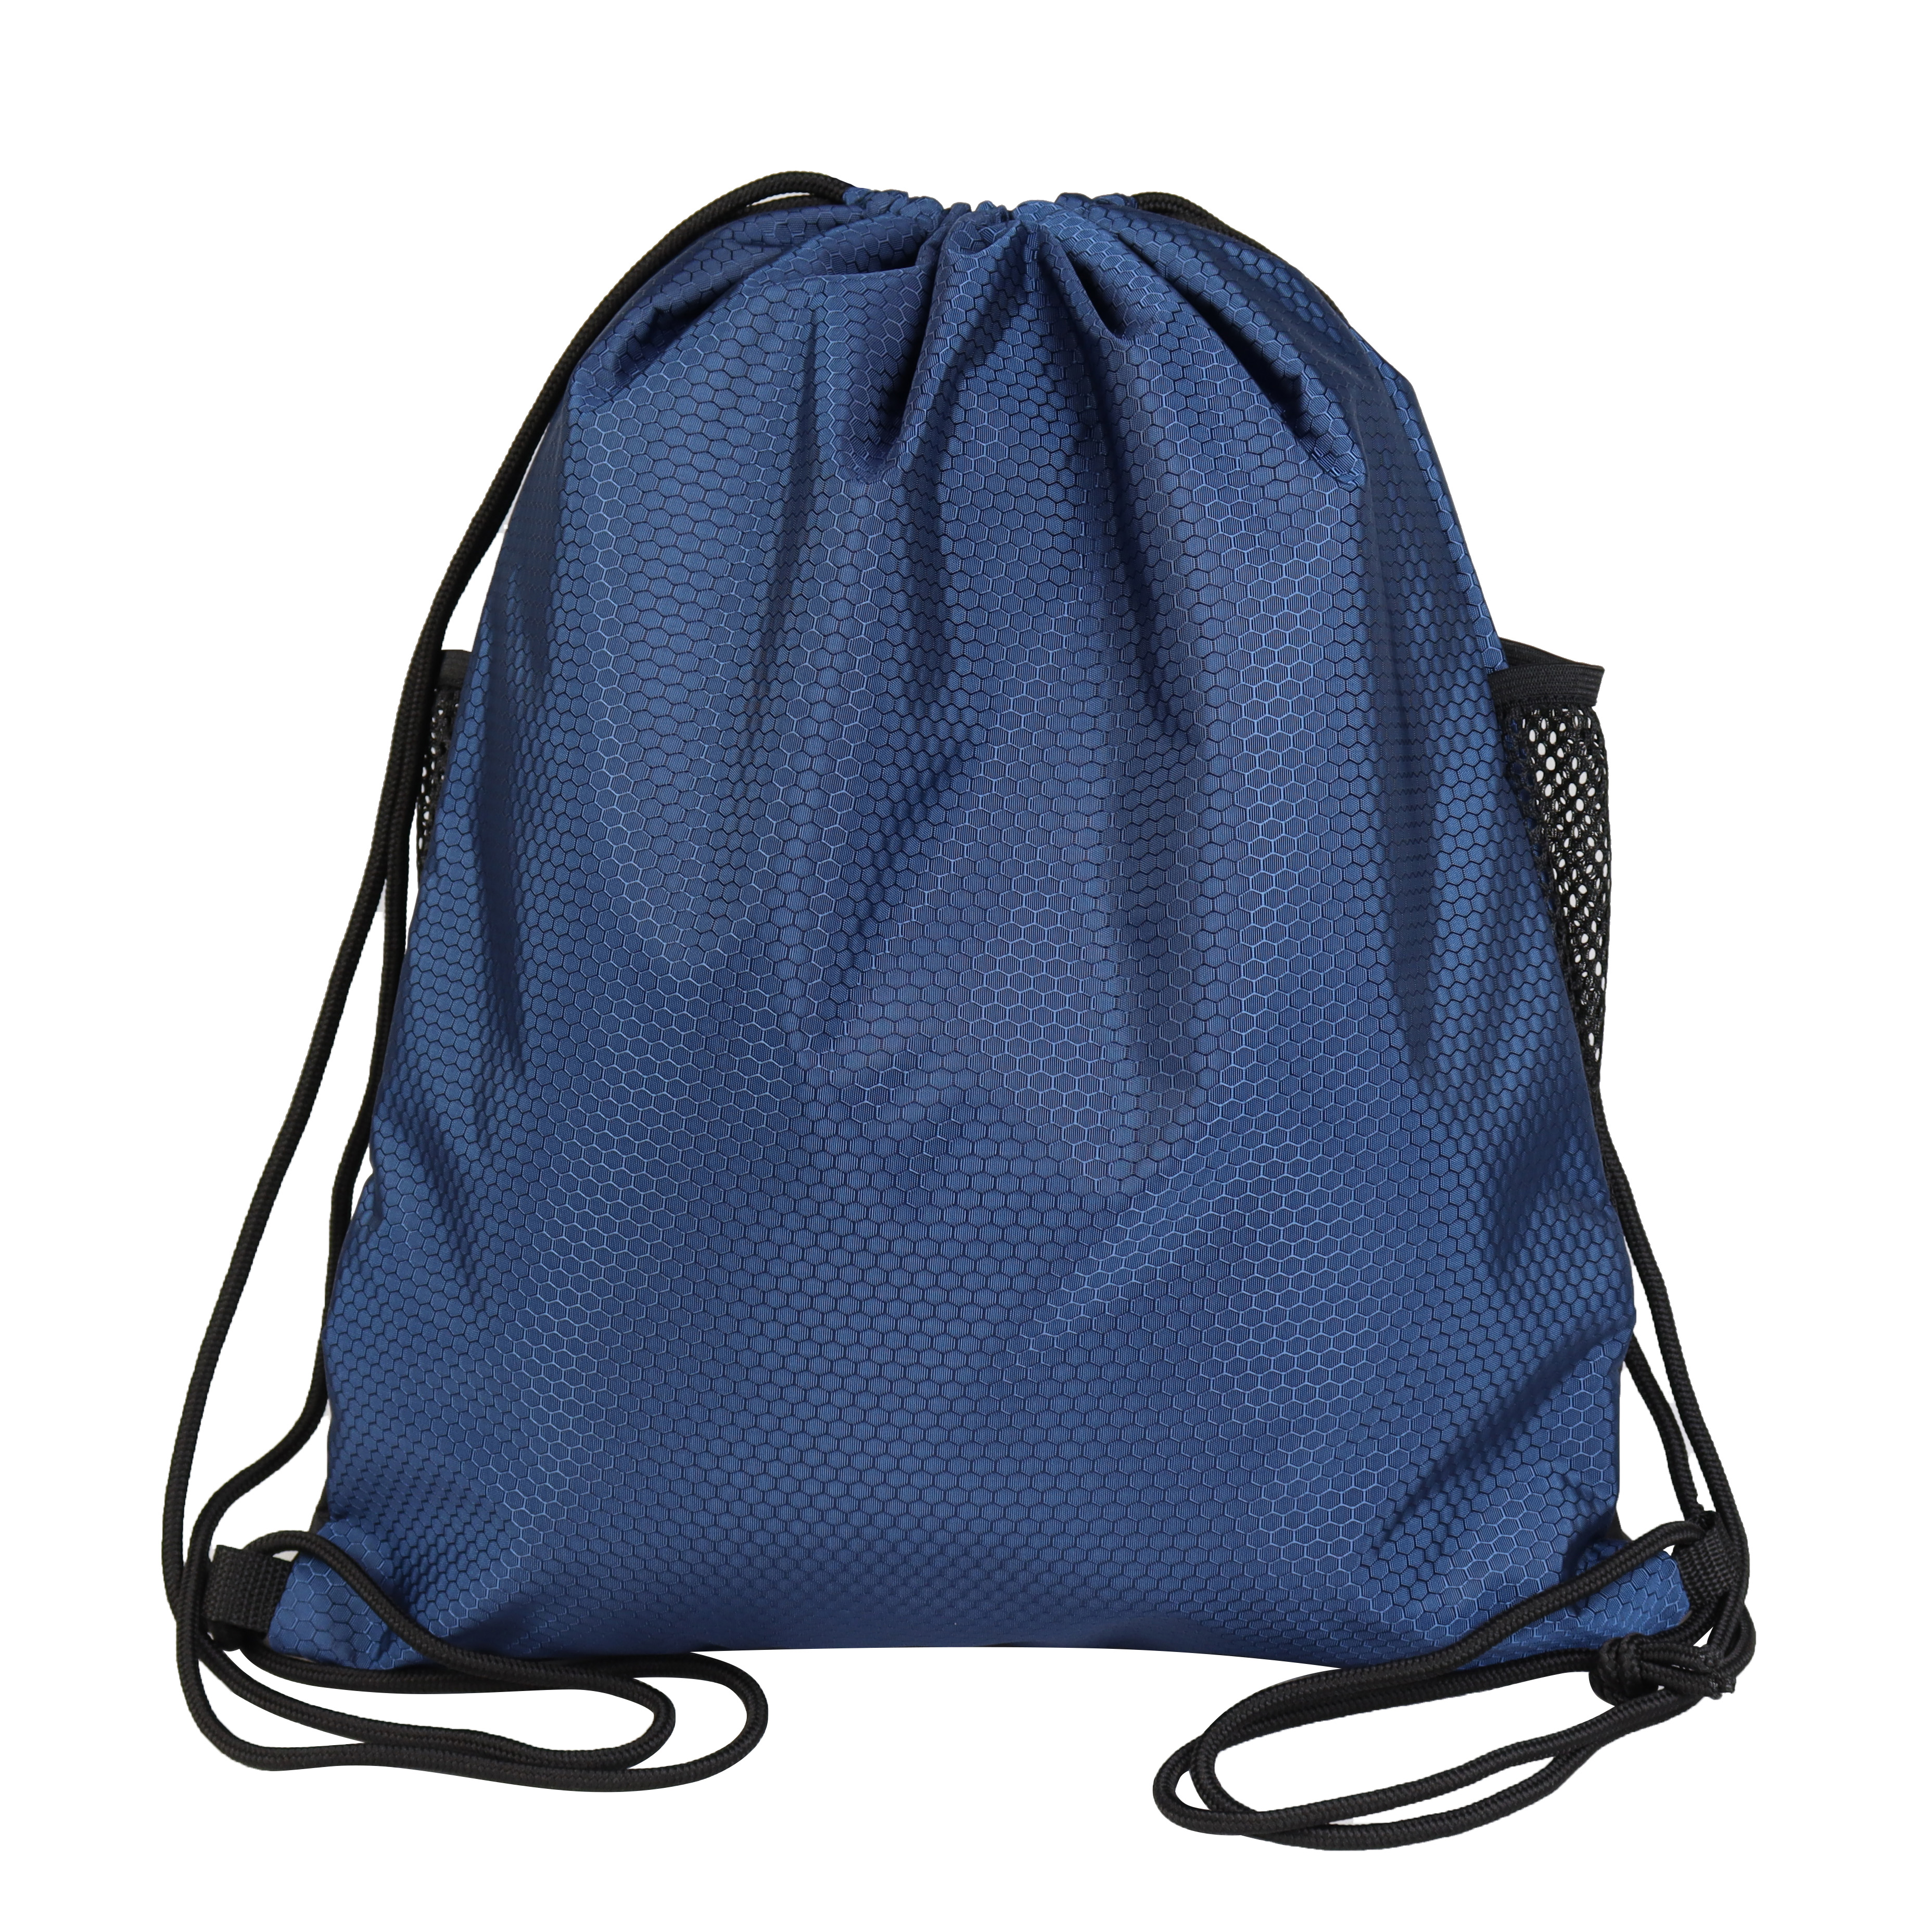 Drawstring backpack school bag